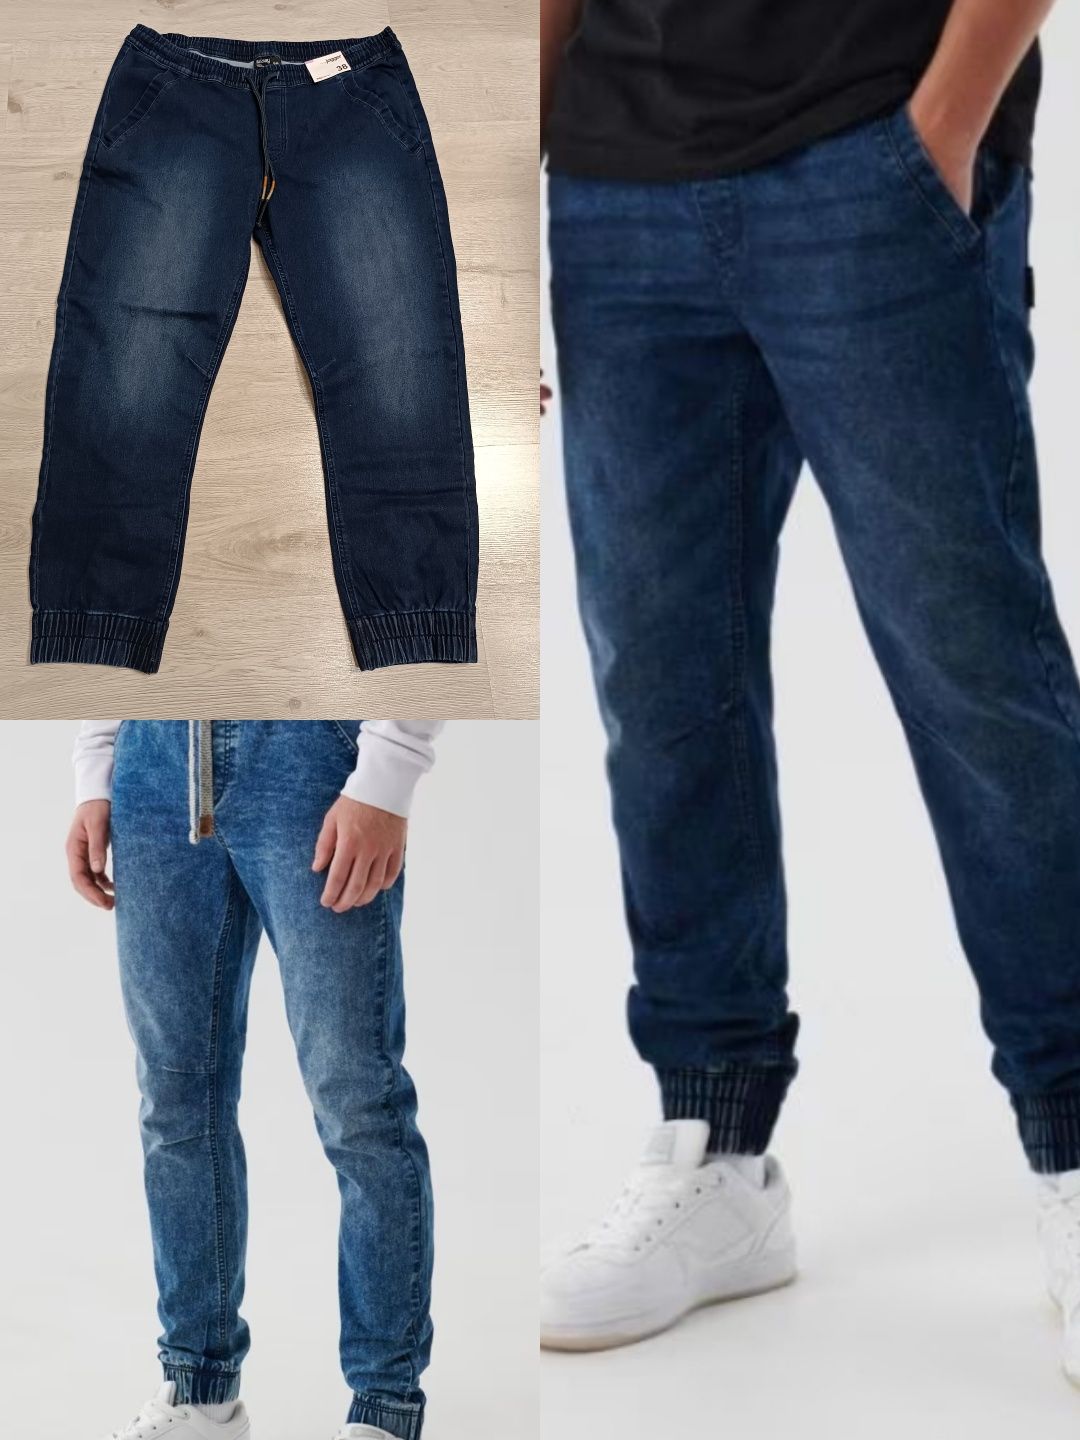 Jogerry jeansy spodnie męskie rozmiar 38